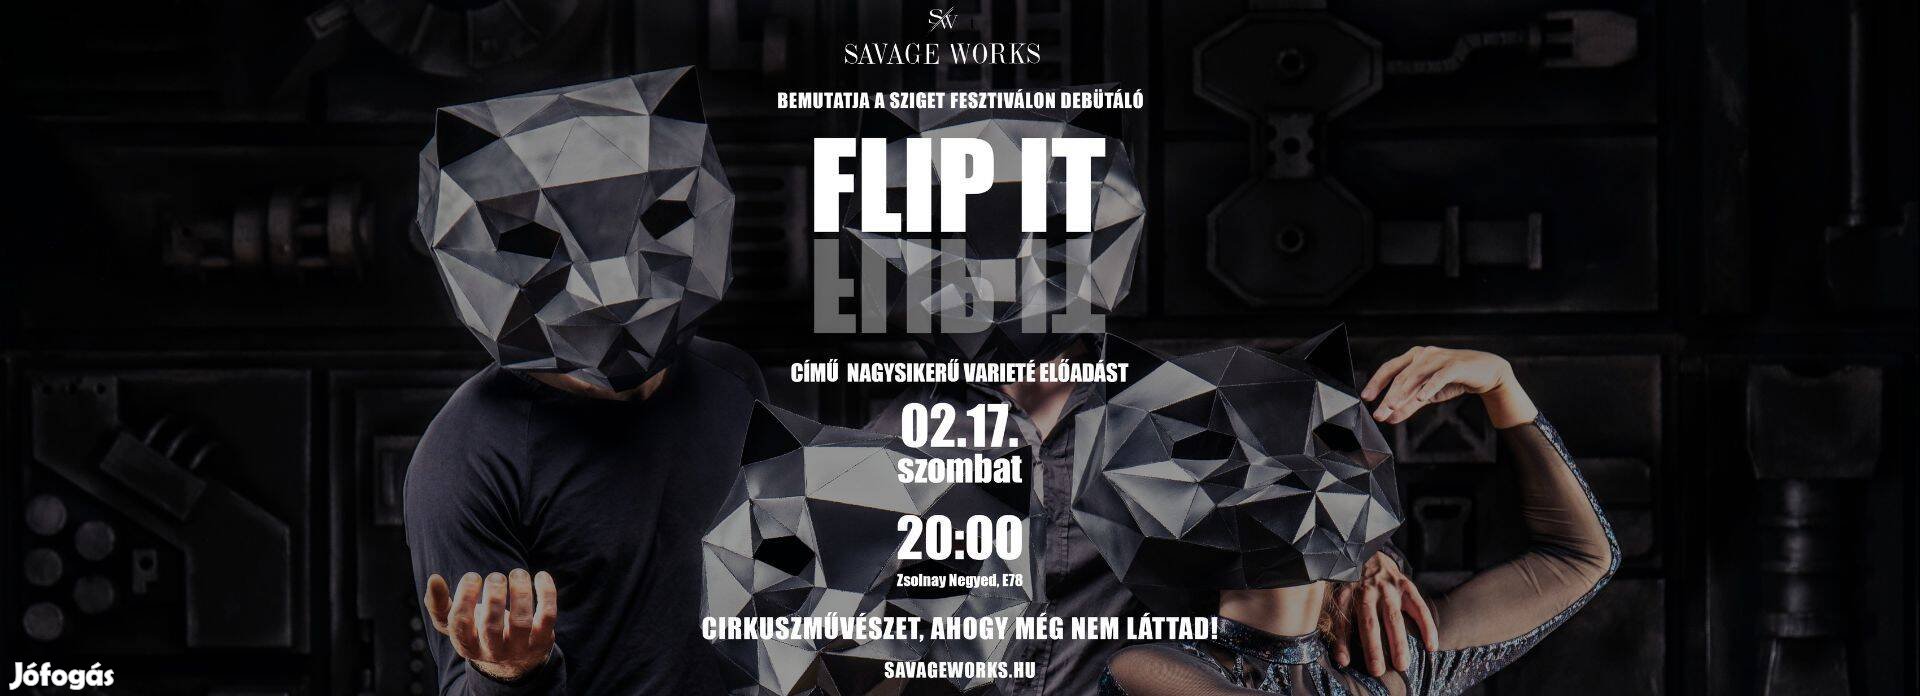 Savage Works/Flip it Pécs - február 17